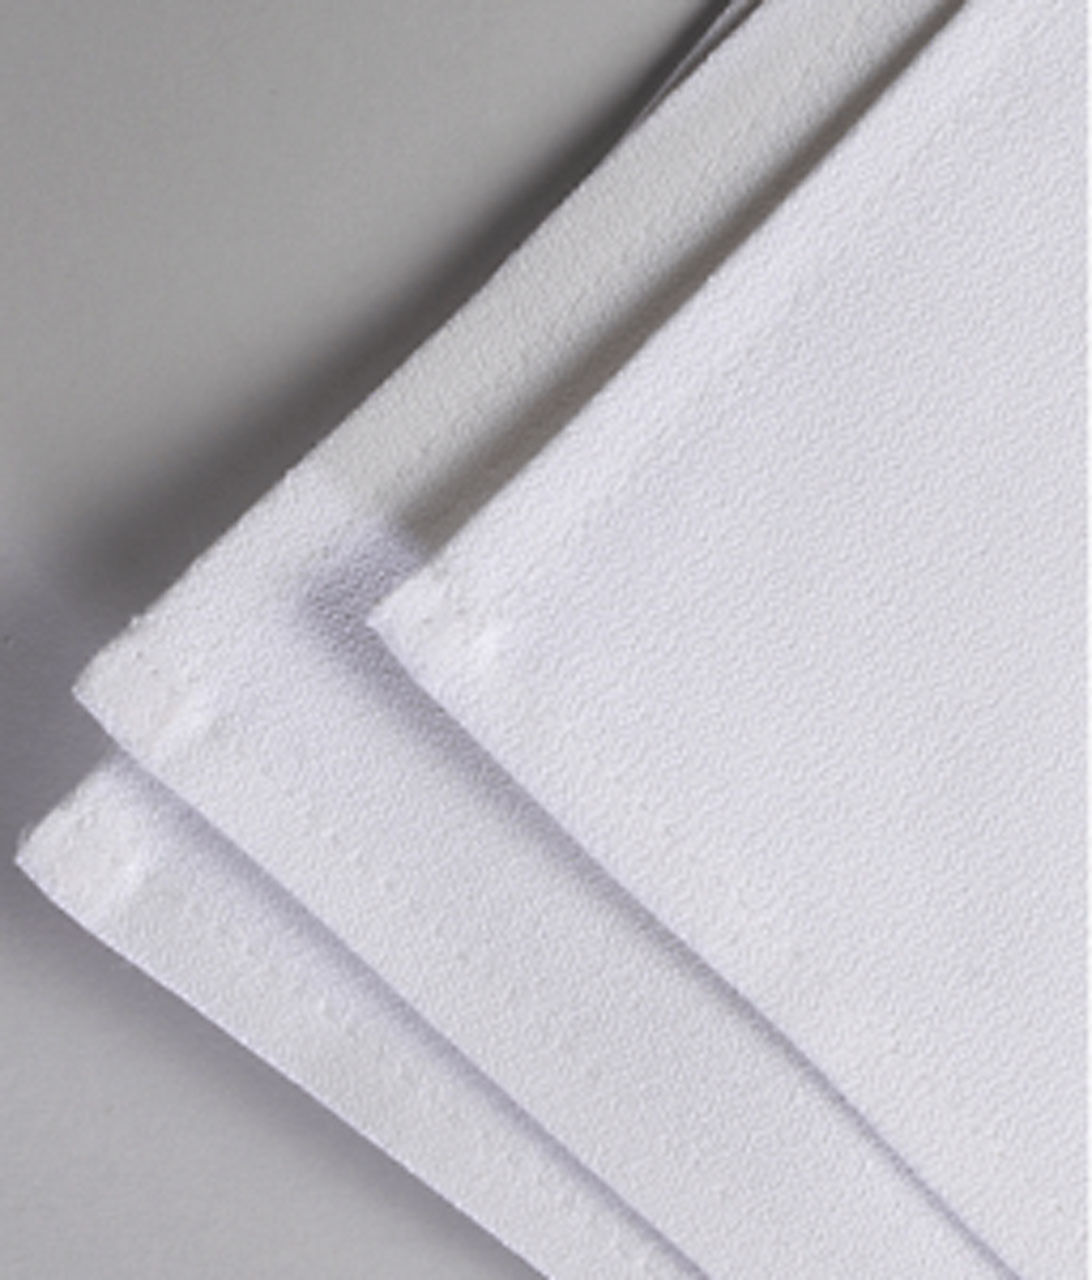 Do cheap cloth napkins bulk like Cotton Momie launder well?